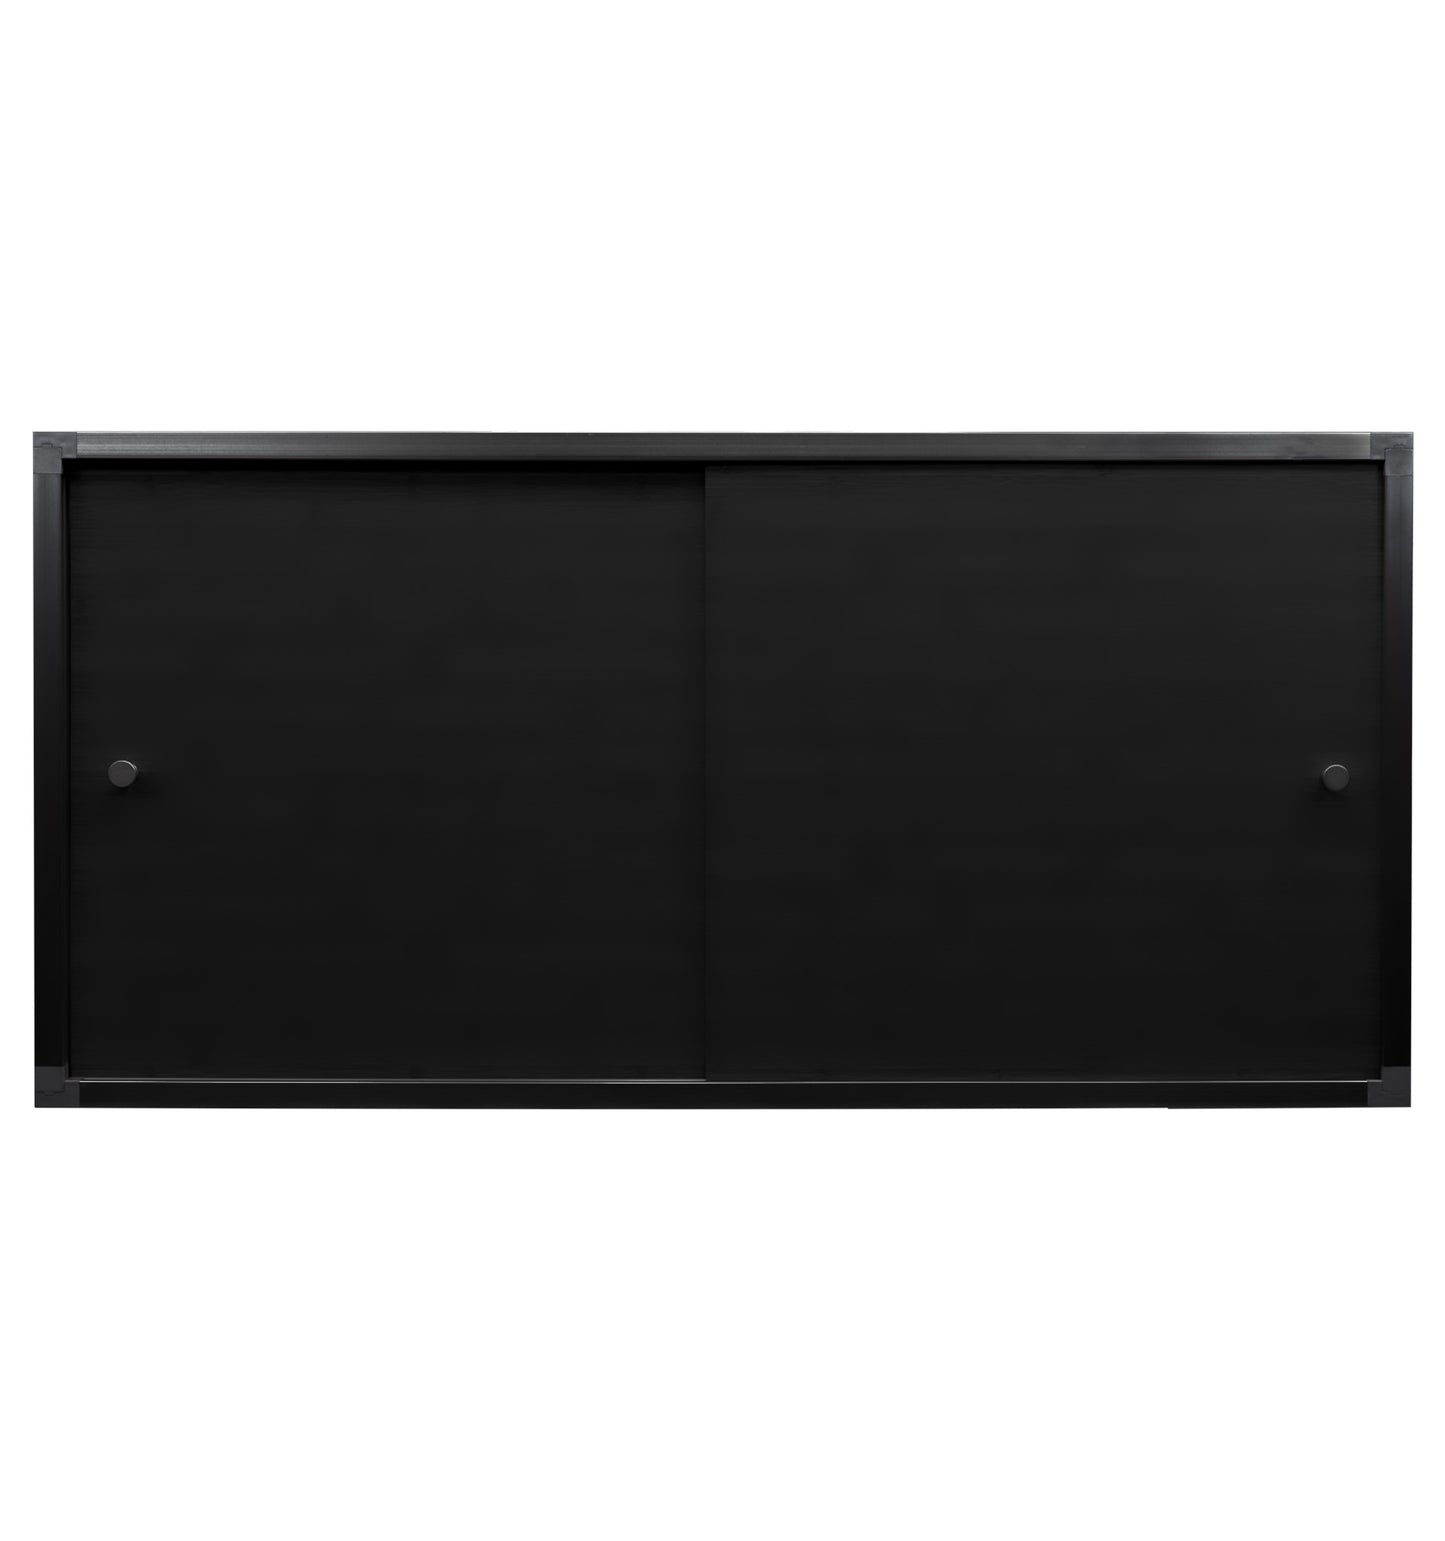 Black Meridian Cabinet Stand - for 4'x2' based Meridian enclosures